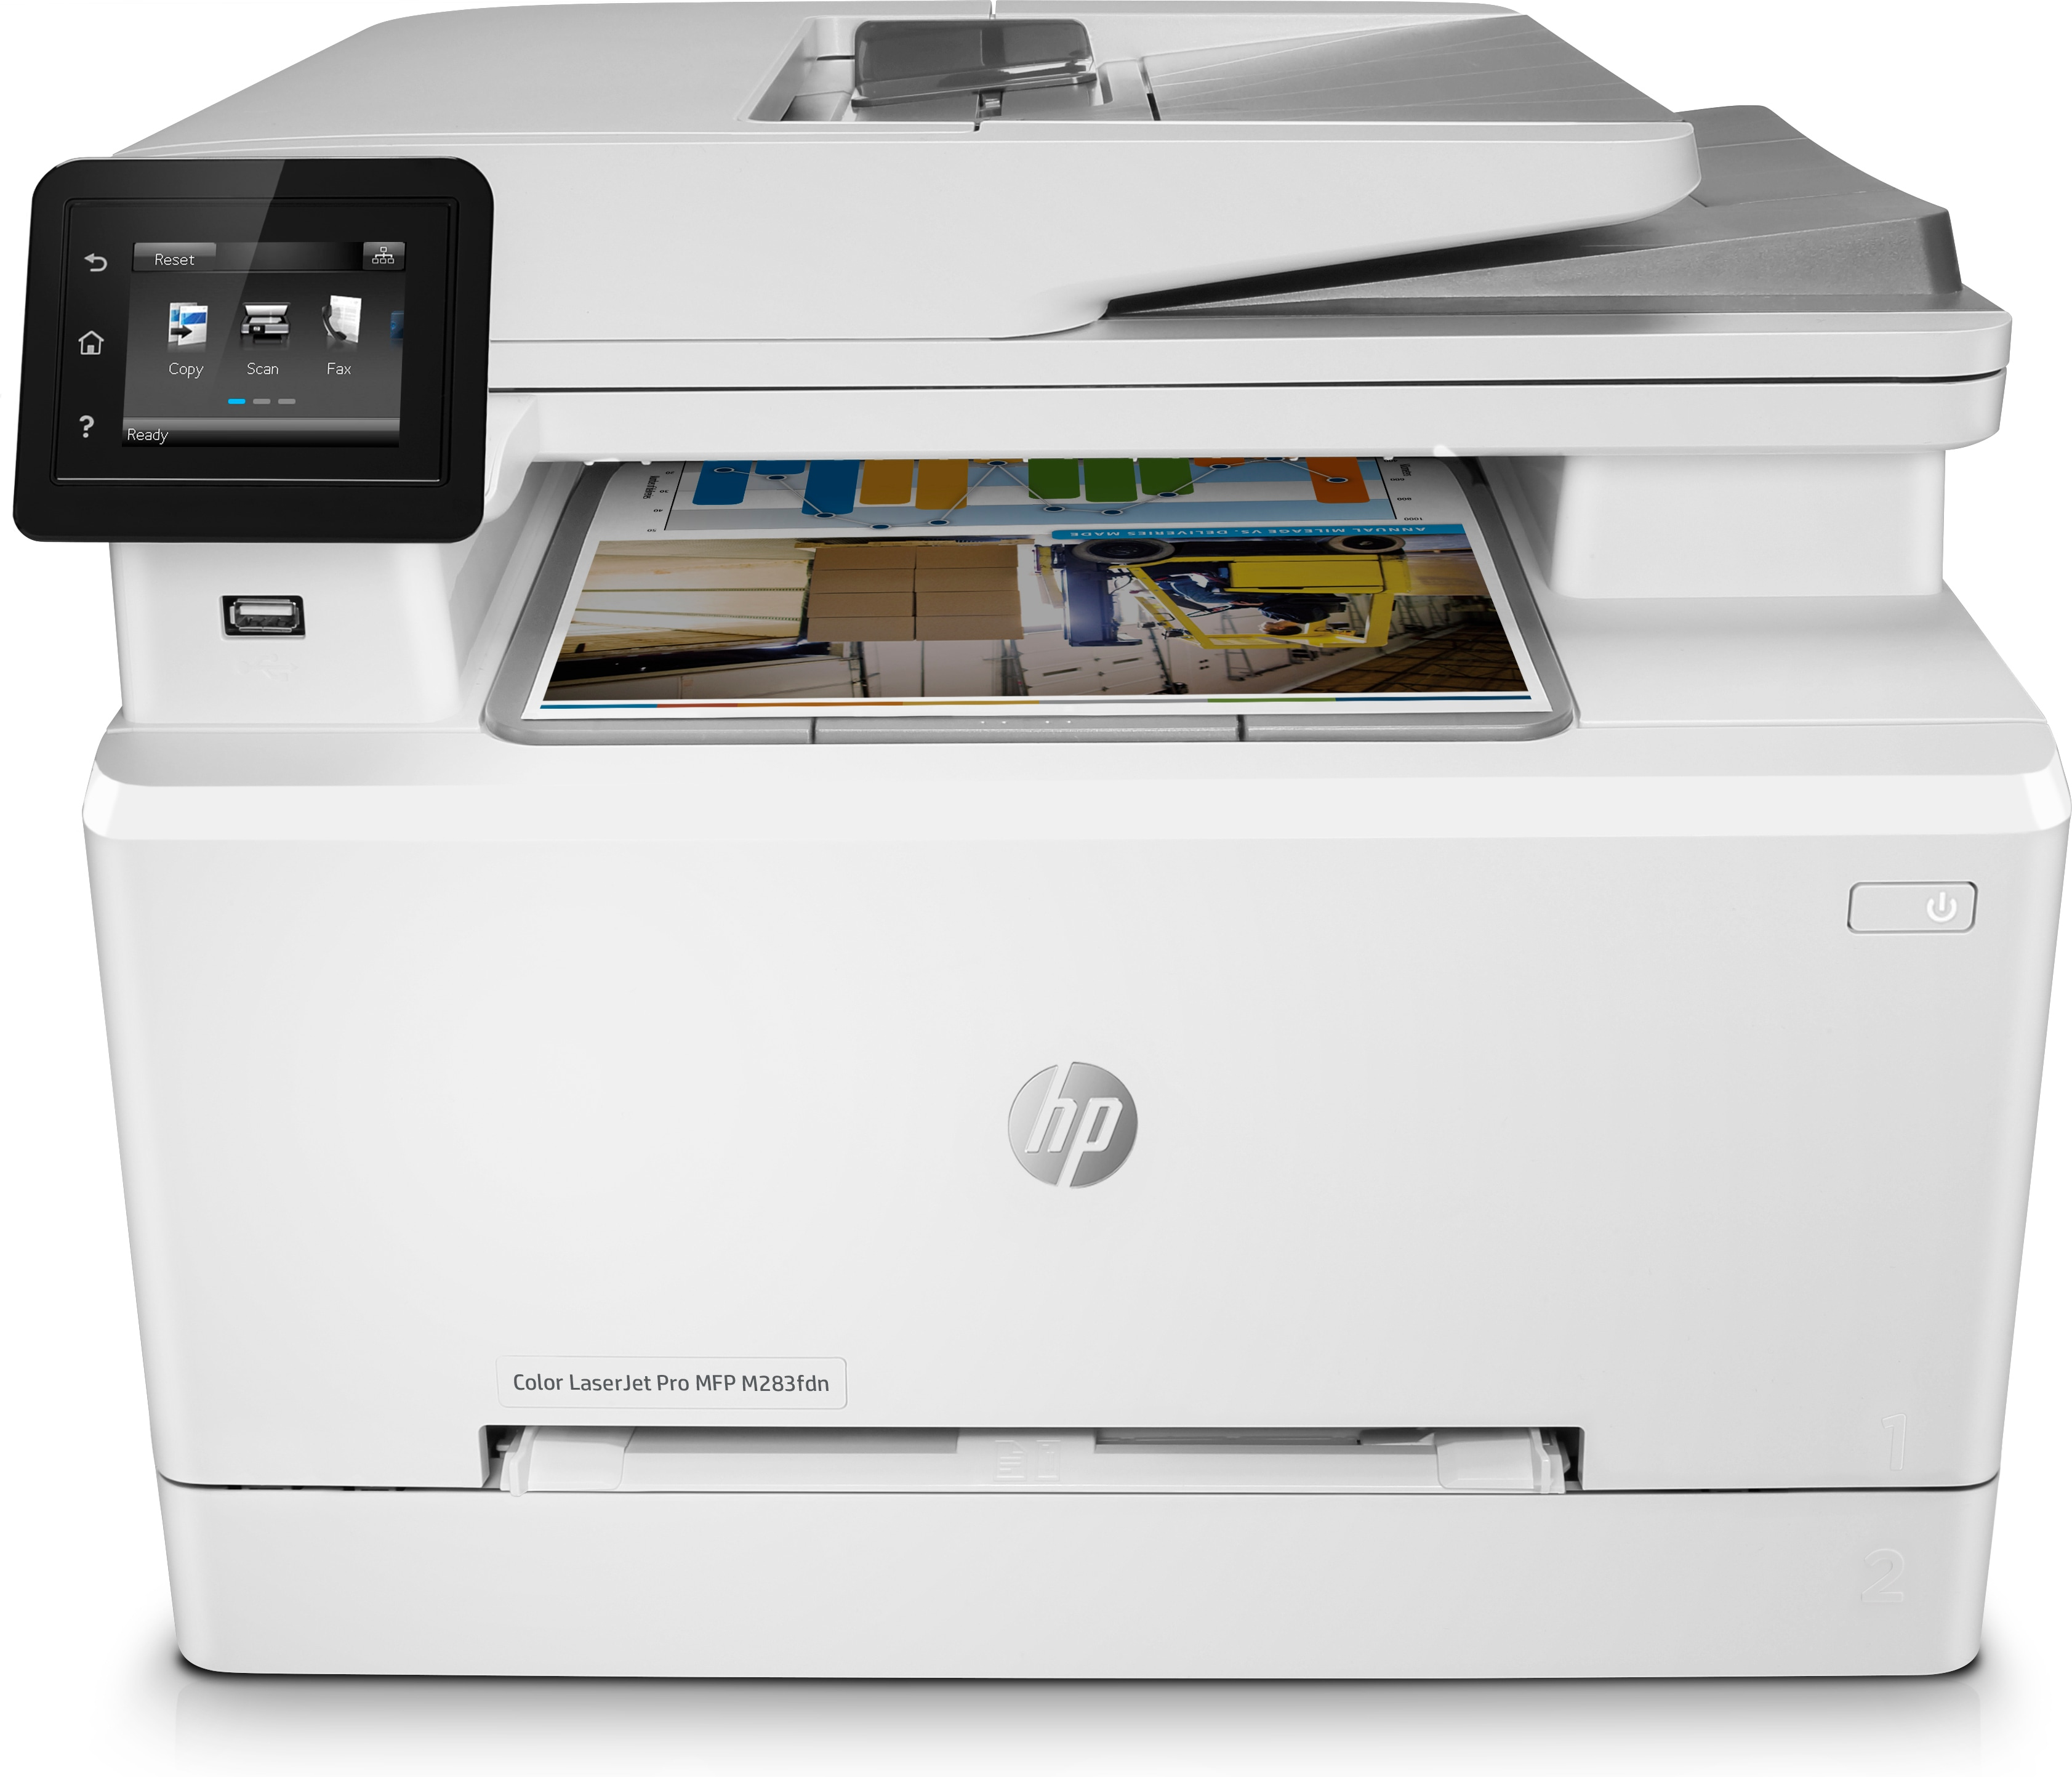 HP Color LaserJet Pro MFP M282nw - Multifunktionsdrucker - Farbe - Laser - Legal (216 x 356 mm)